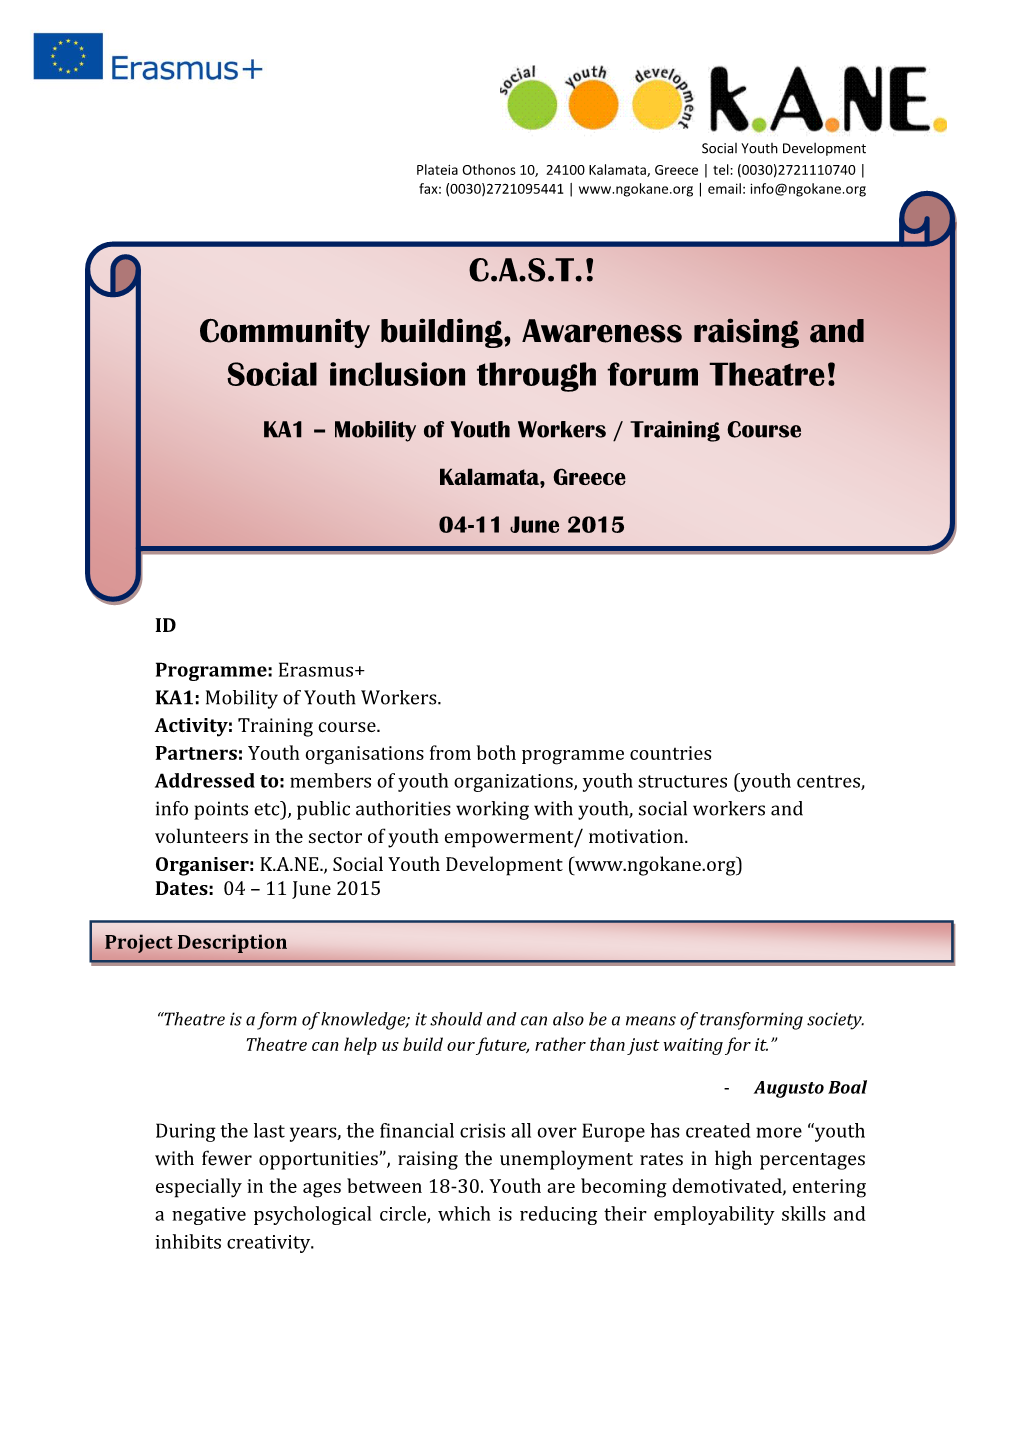 C.A.S.T.! Community Building, Awareness Raising and Social Inclusion Through Forum Theatre!